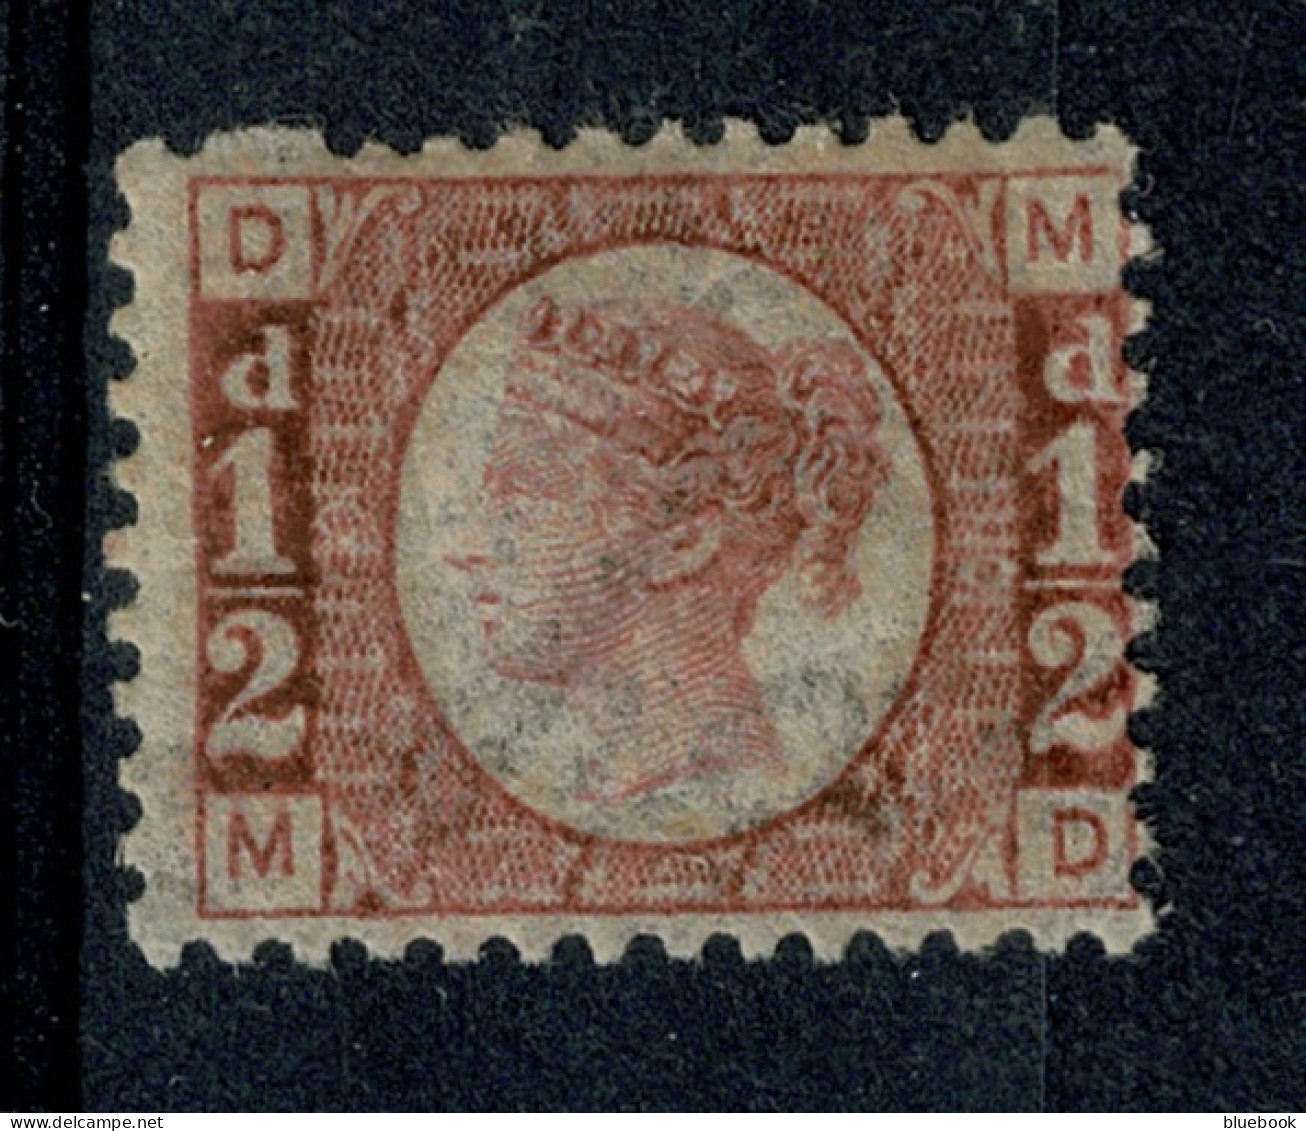 Ref 1606 -  GB QV 1870 1/2d Bantam Plate 10 MNH Stamp - SG 48 - Nuovi